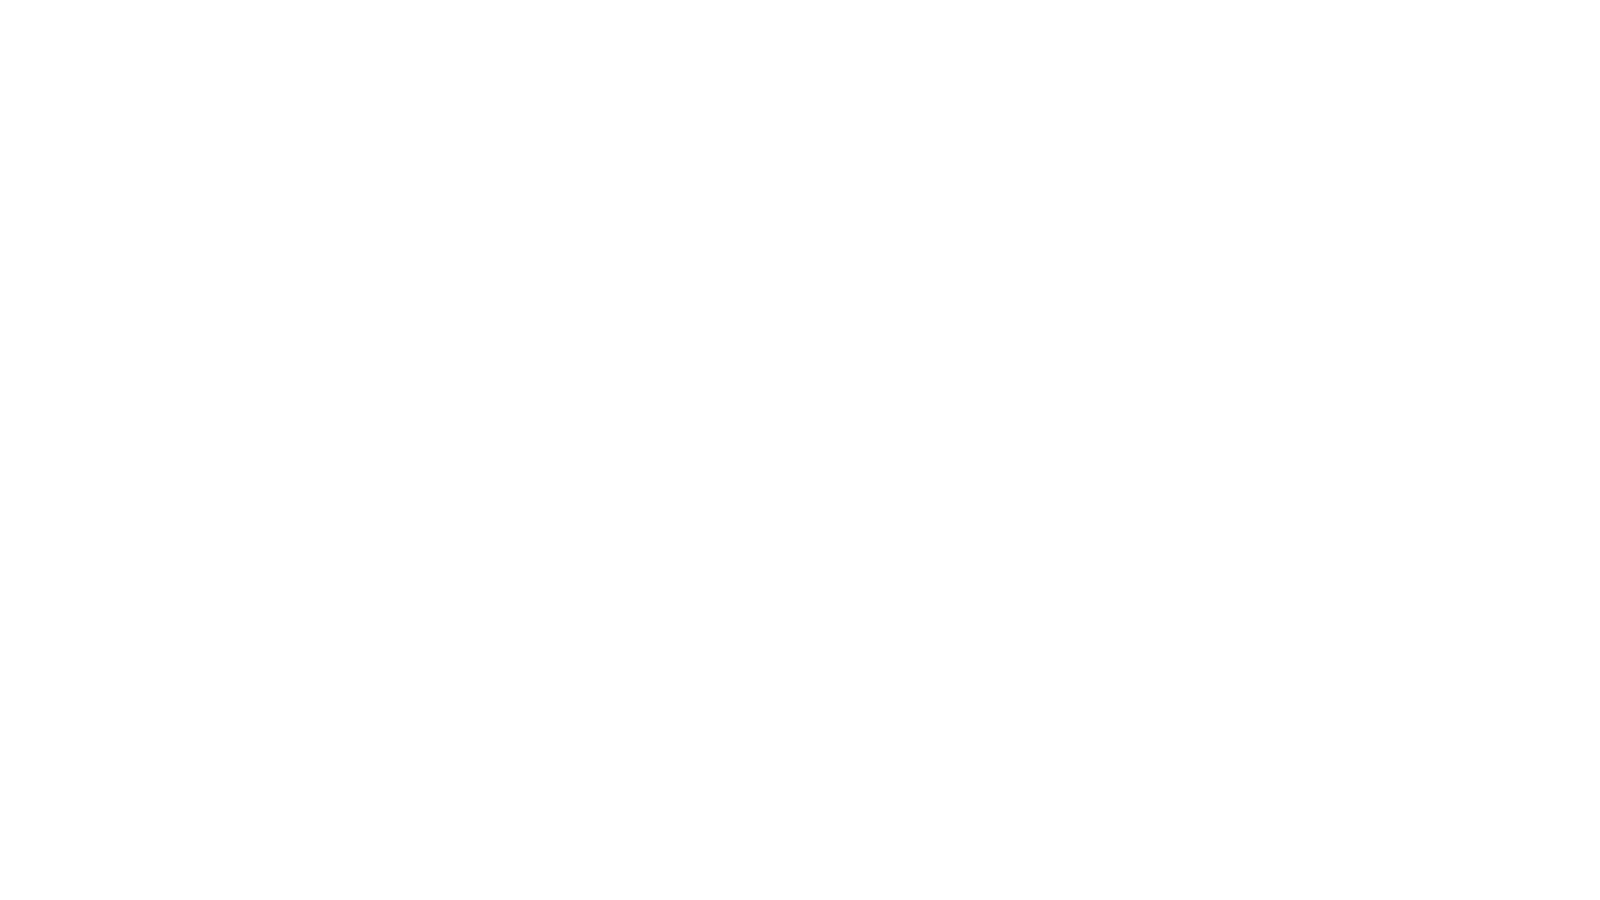 #Untitled #SankaDineth #DanithSri | Episode -15 | 2019-10-27 | #RupavahiniMusical
Follow on:
Official website - http://www.rupavahini.lk
Official Facebook Page - https://www.rupavahini.lk/facebook
Official Twitter Page - https://www.rupavahini.lk/twitter
Official YouTube Channel - https://www.rupavahini.lk/youtube
Official Instagram - https://www.instagram.com/rupavahini.lk